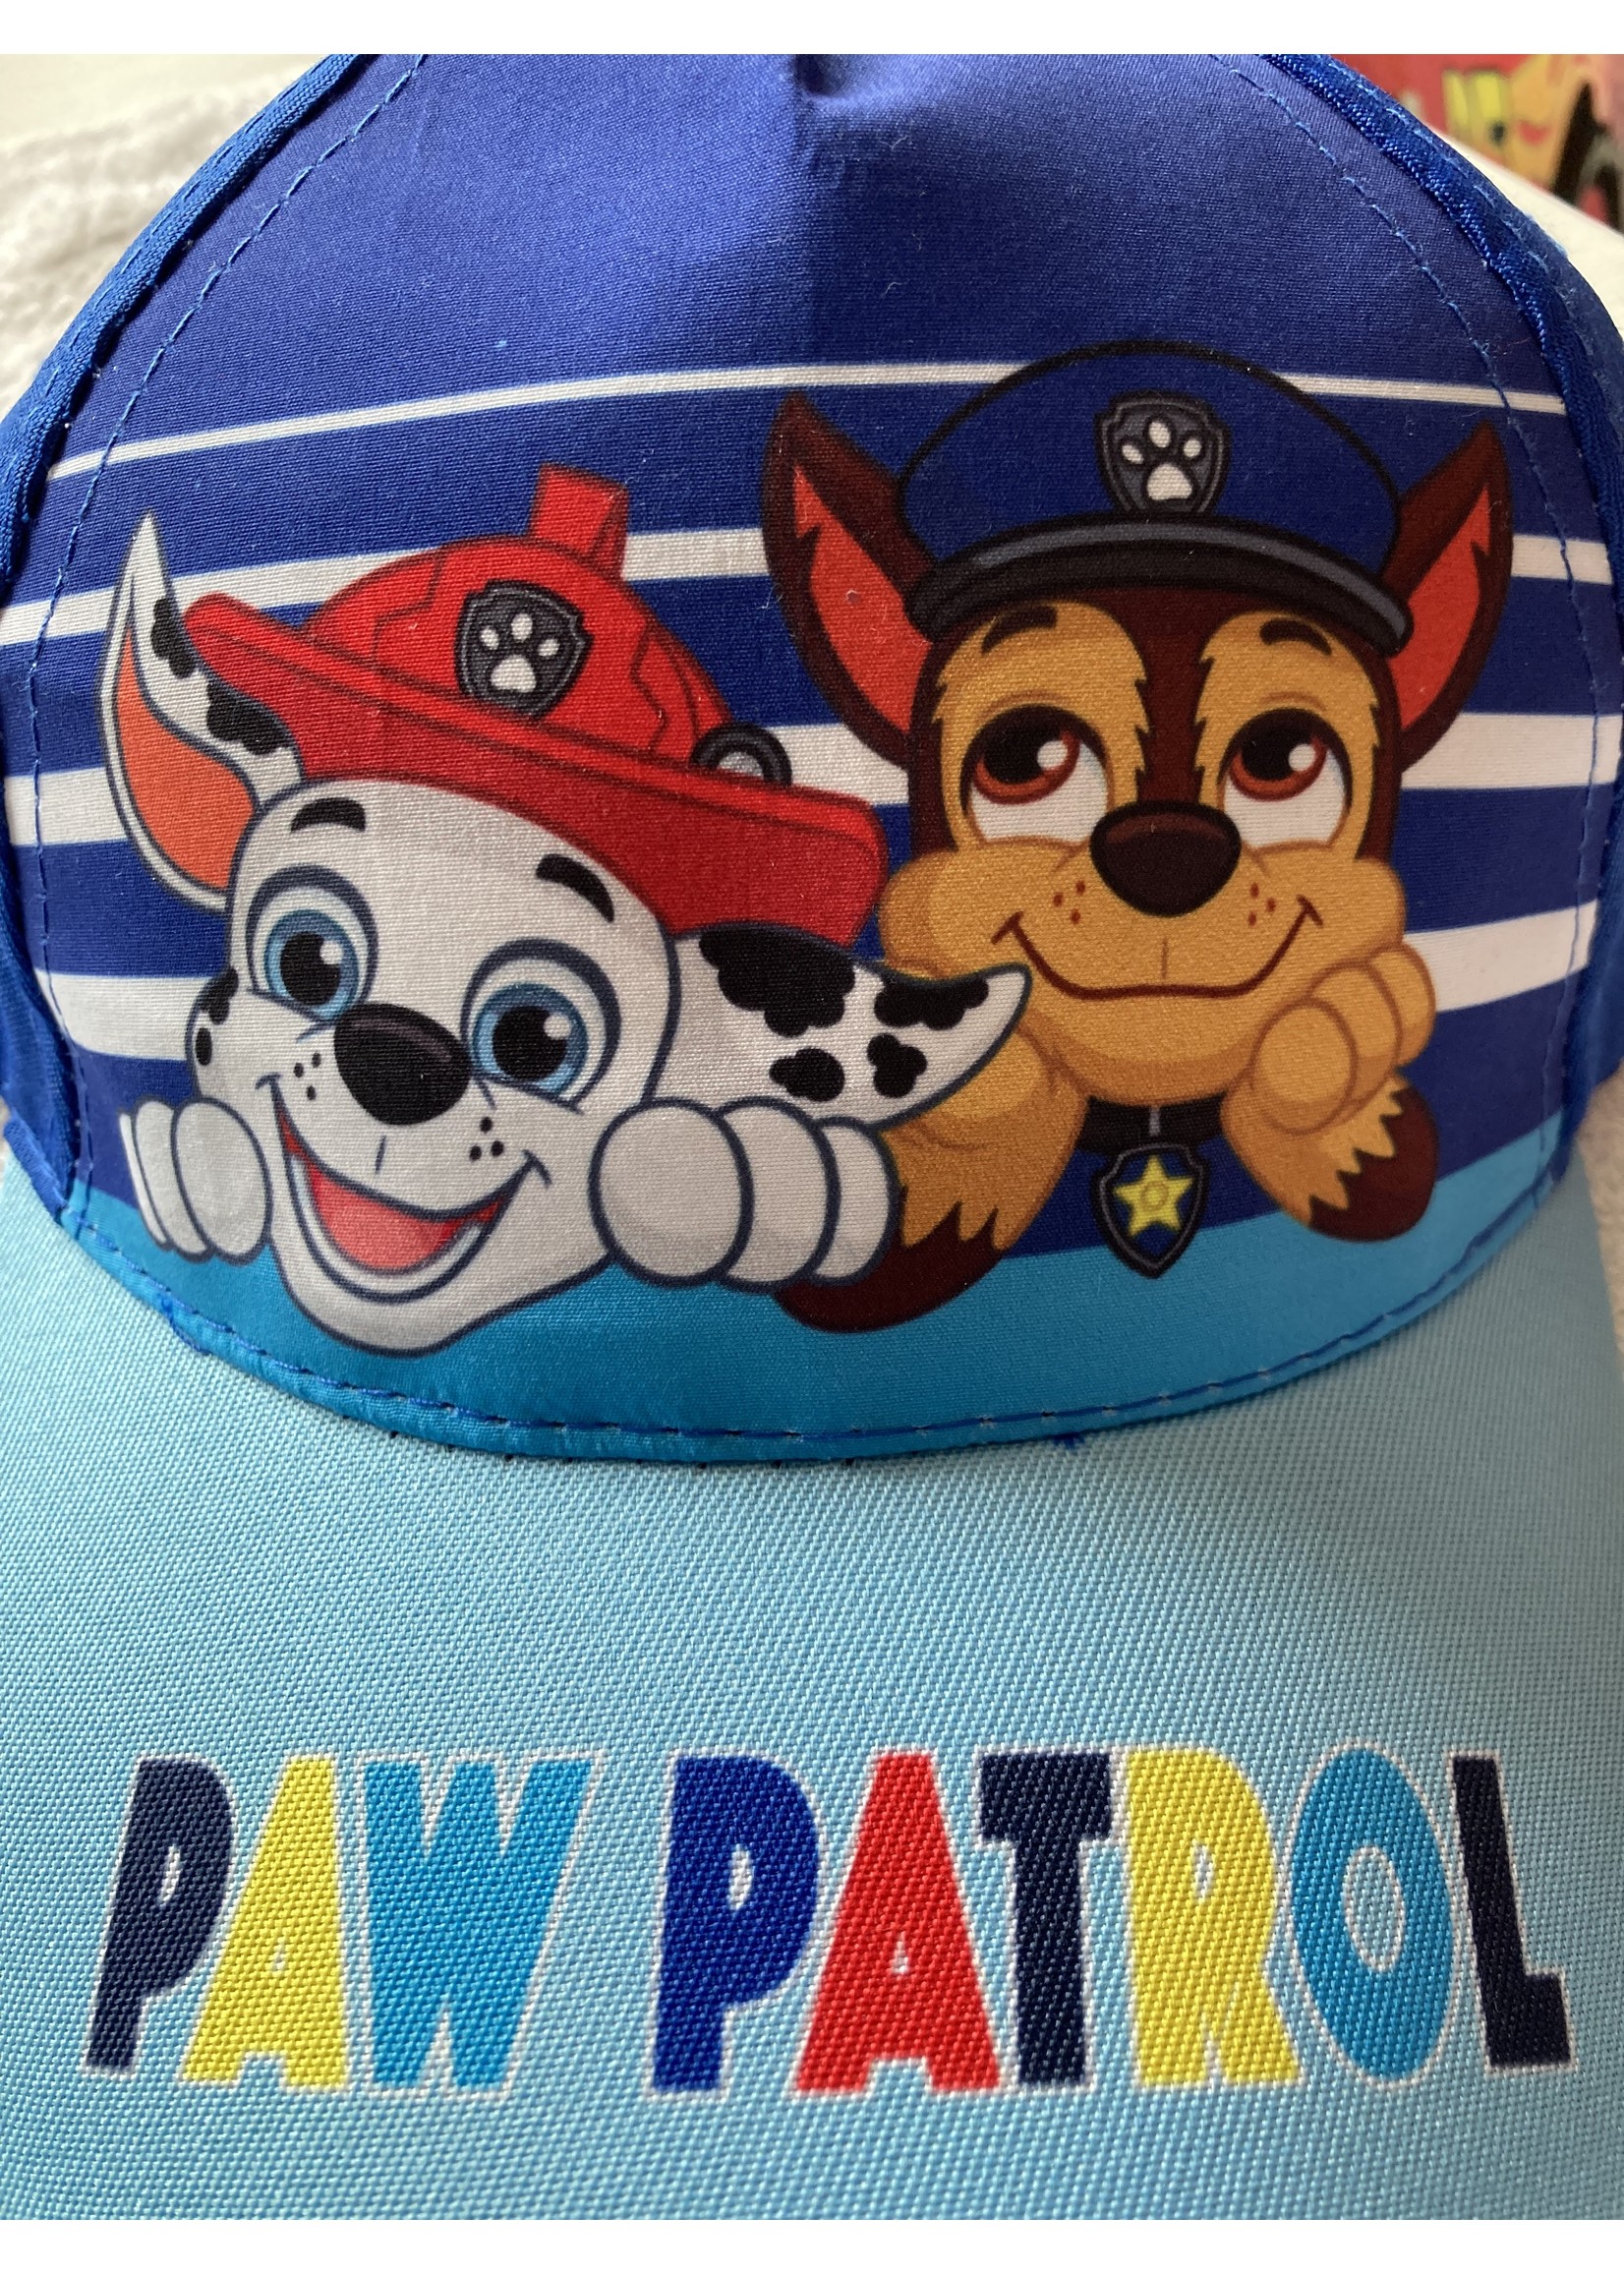 Nickelodeon Paw Patrol baseball cap from Nickelodeon blue